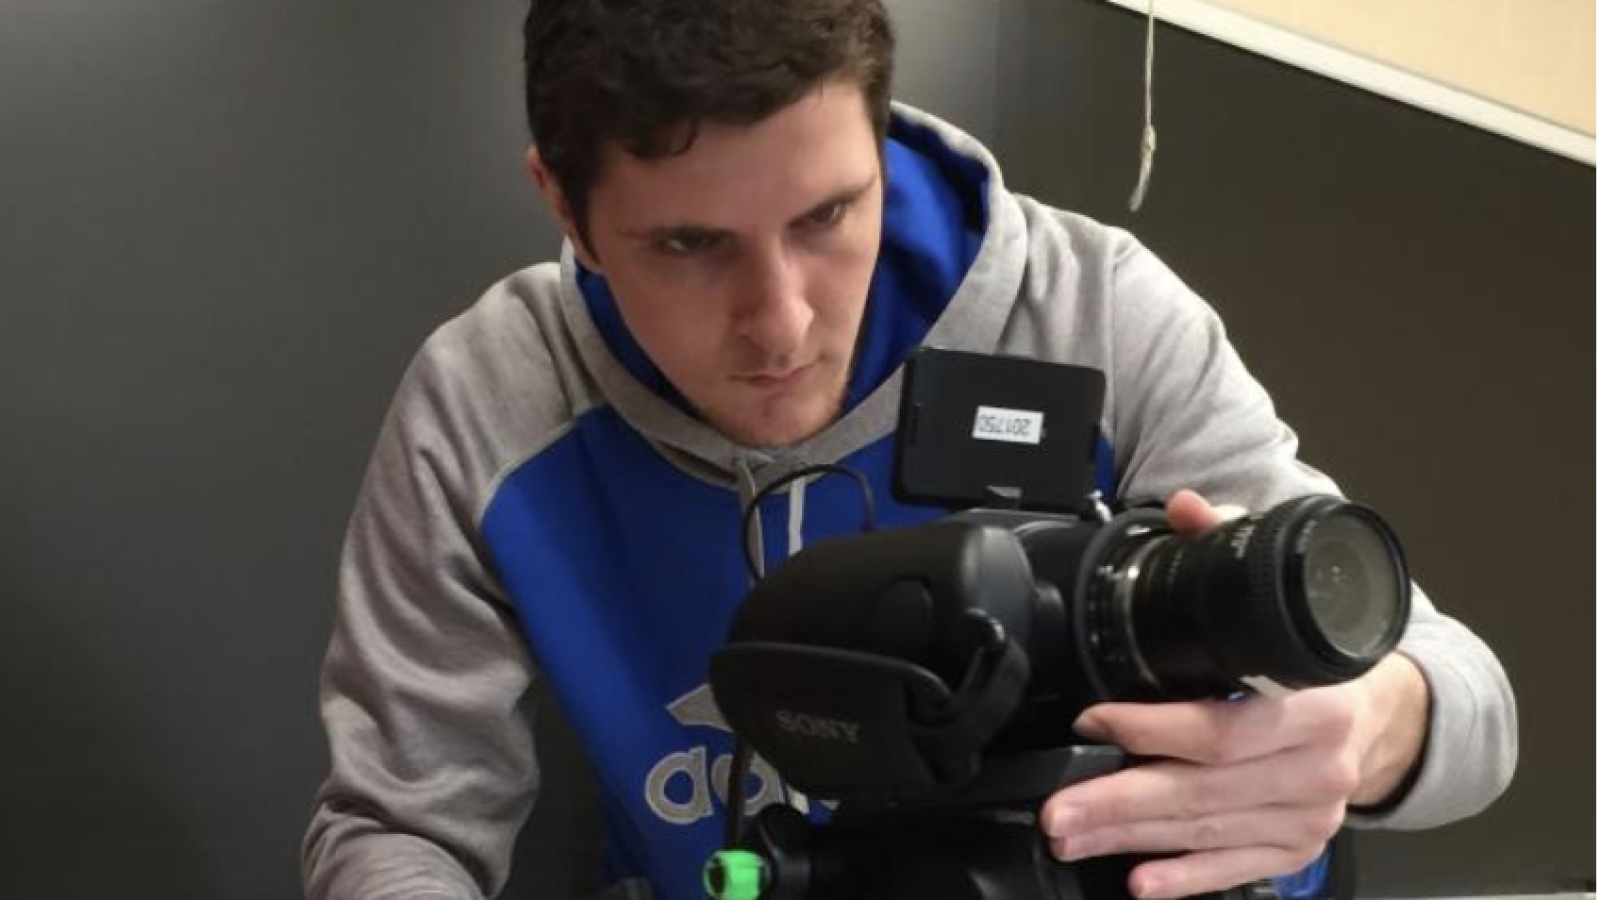 Kyle filming